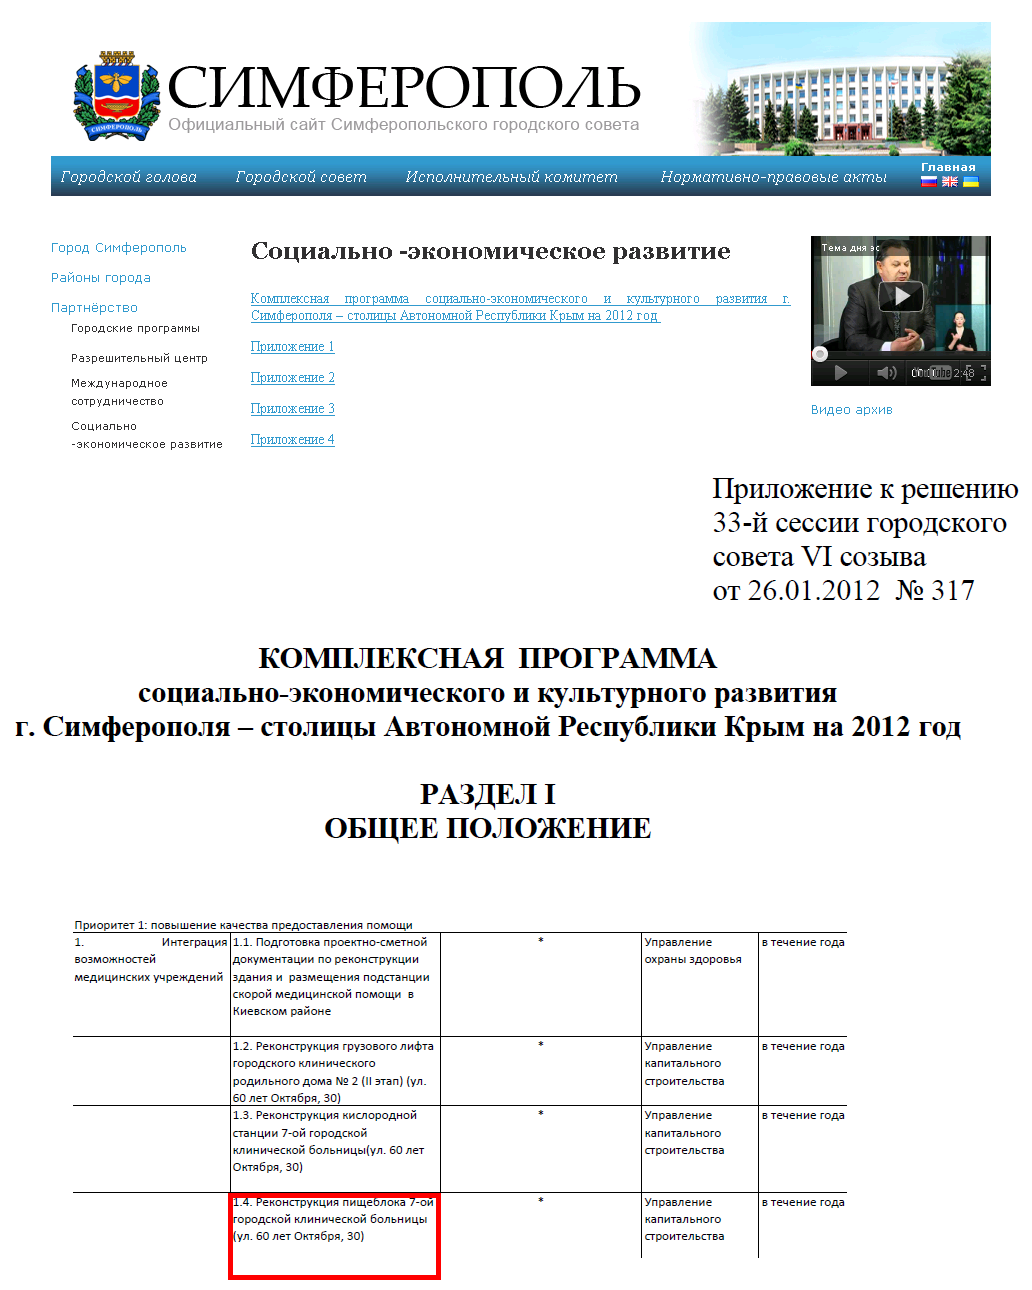 http://sim.gov.ua/ru/static/13